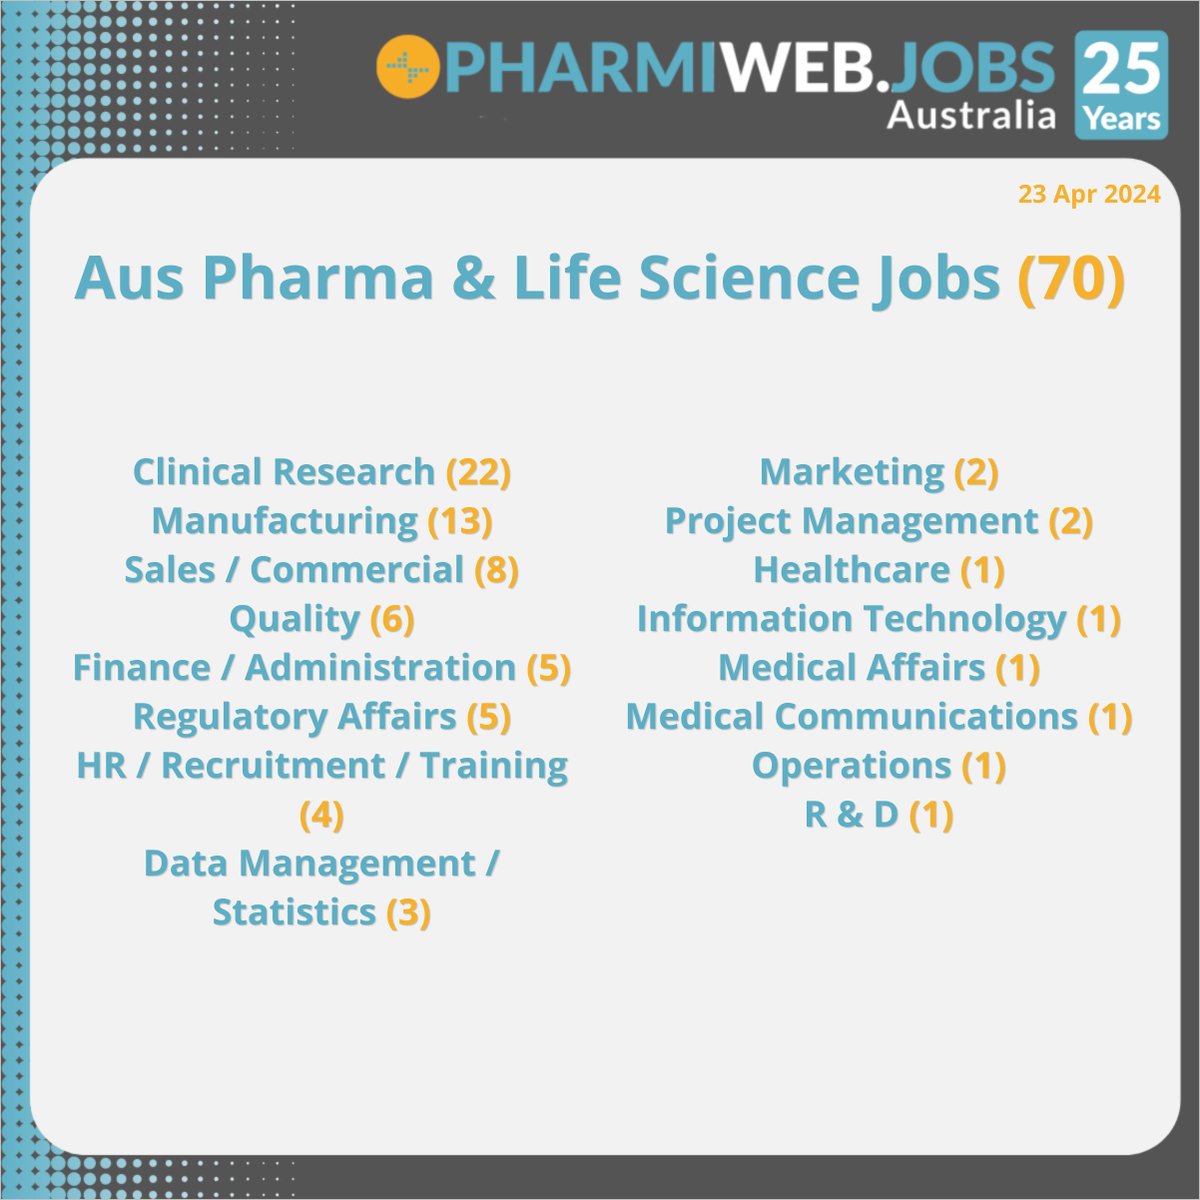 70 Pharma & Life Science Jobs Today
Search Now - phrmwb.com/3Jxd7VE

Register & Upload Your CV Now! phrmwb.com/49Nkbbl

#Pharma #pharmaceuticals #Biotech #ClinicalResearch #LifeSciences #MedicalDevices #Biotechnology #PharmaJobs #healthcare #jobs #Australia #PharmiWeb